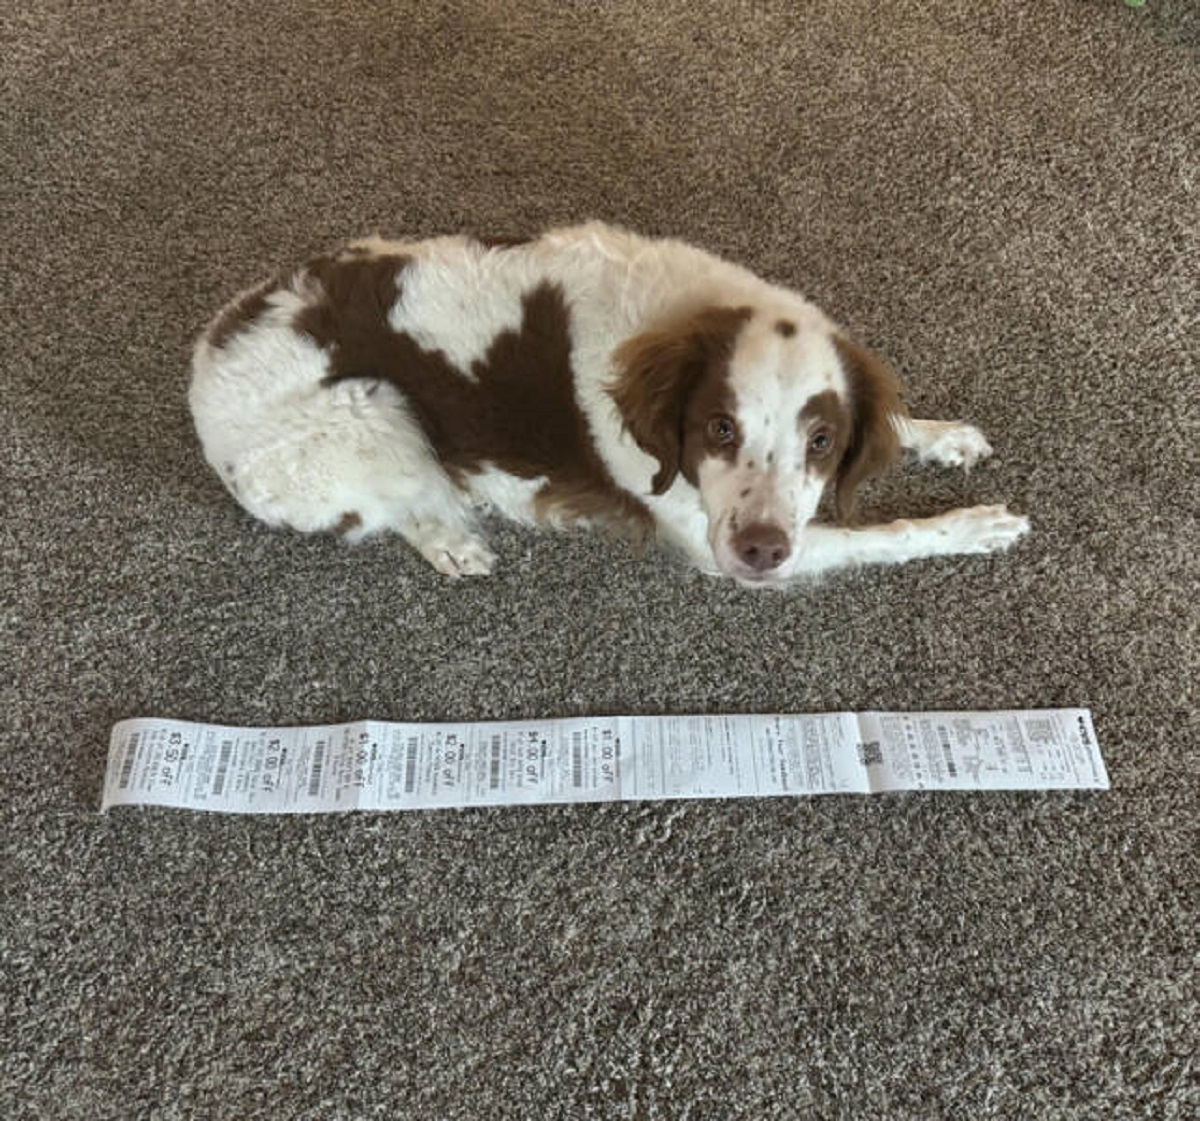 “My 3 item receipt from CVS is longer than my dog.”